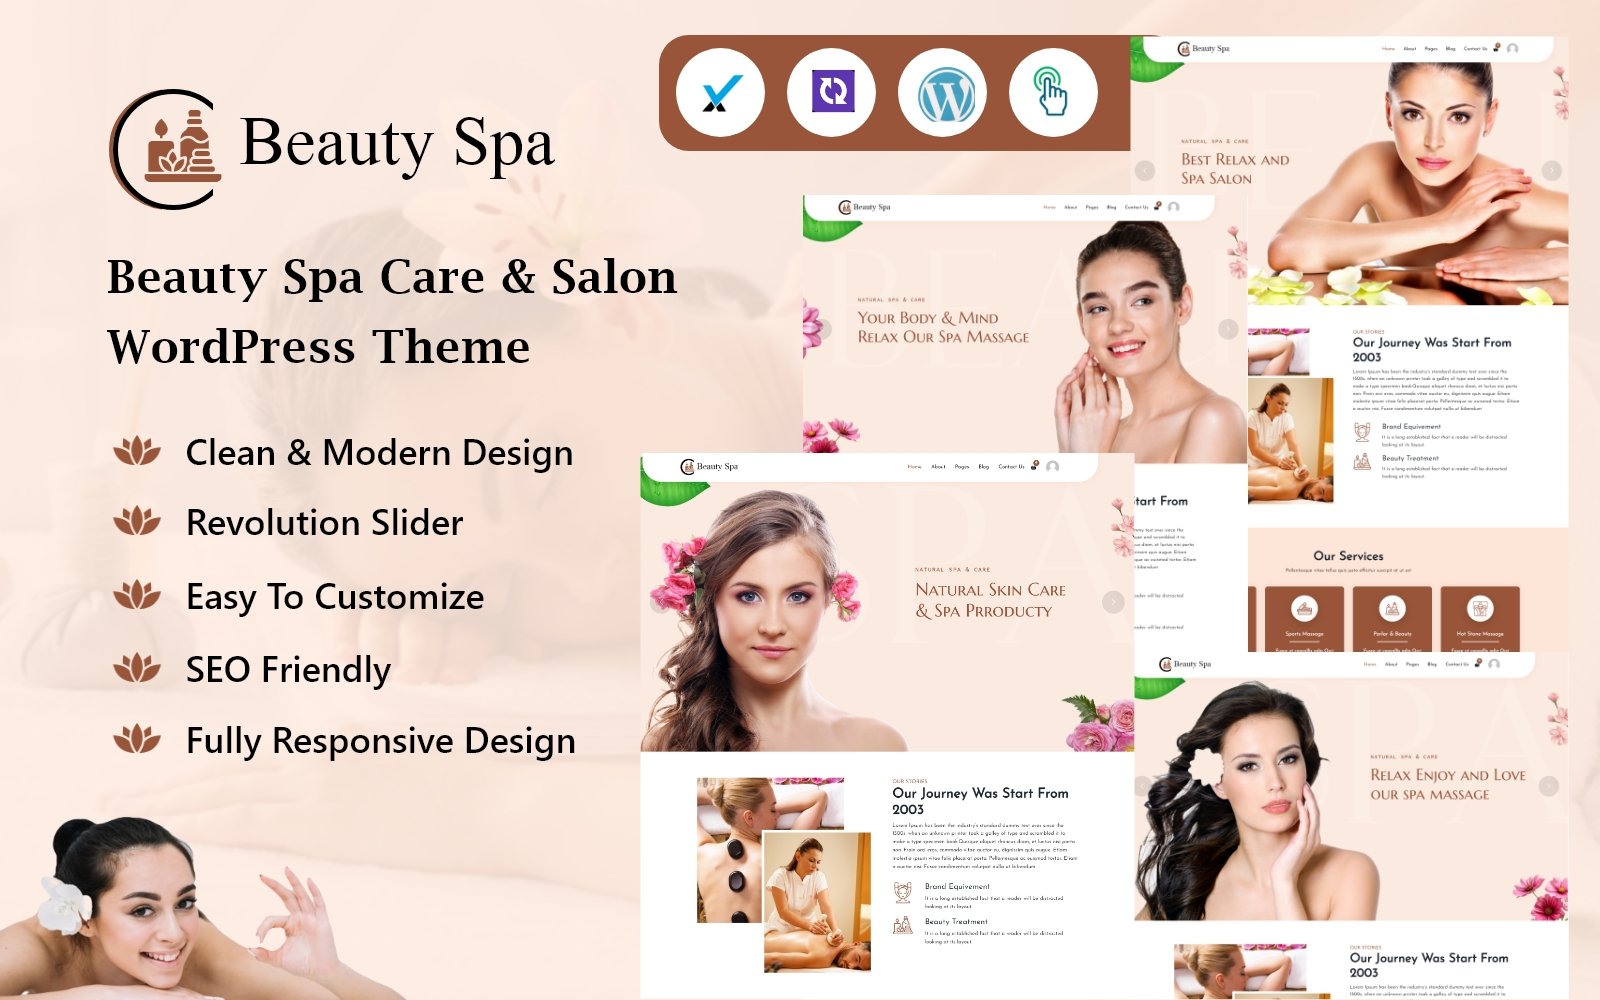 Beauty Spa Care & Salon WordPress Theme